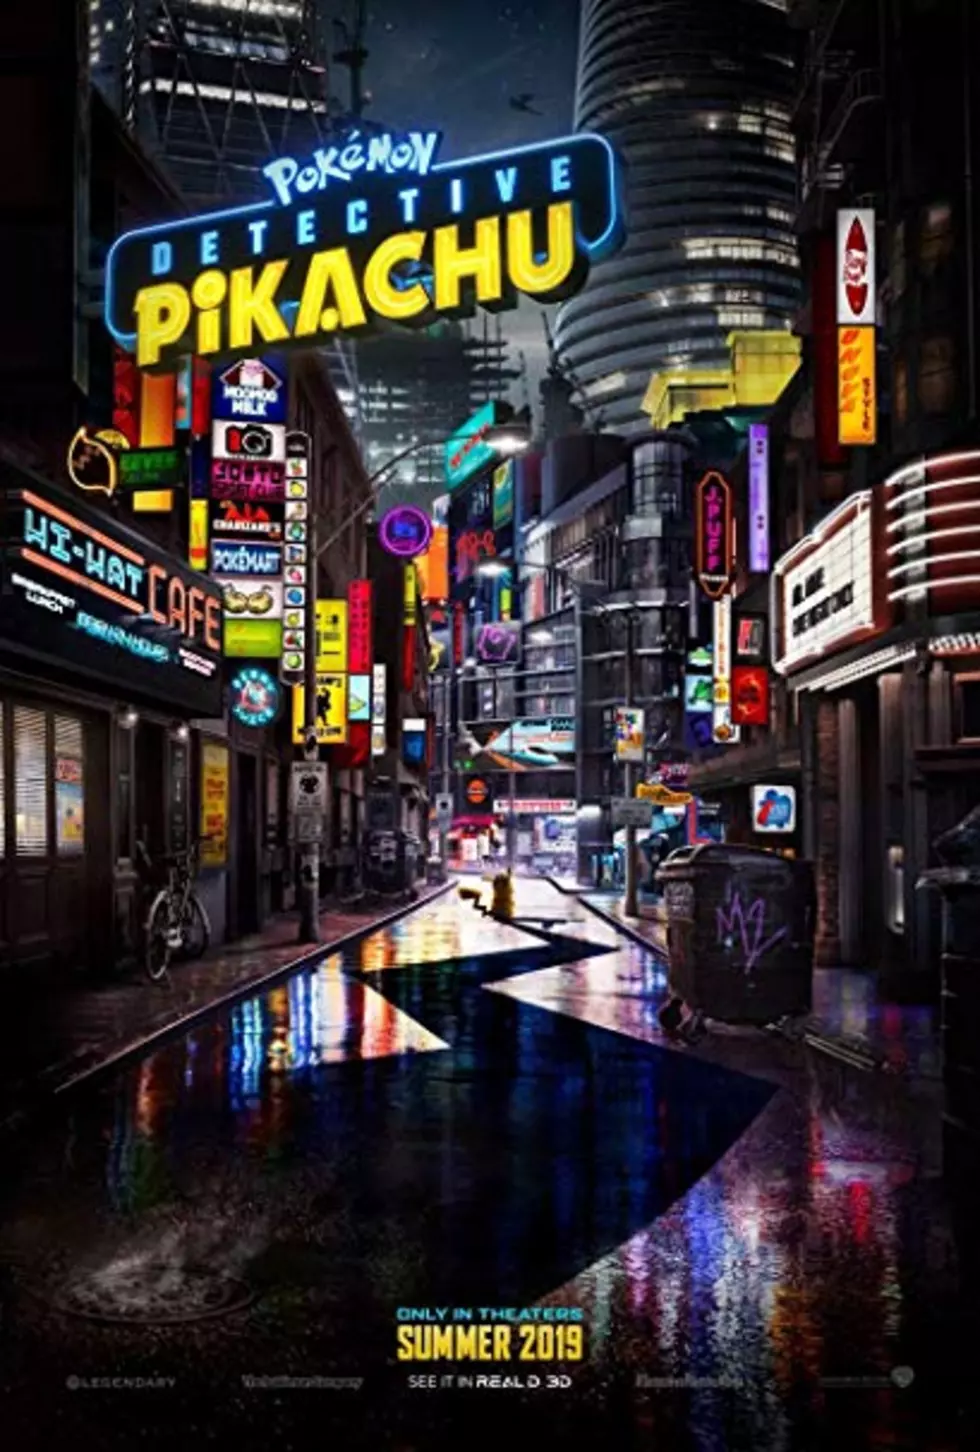 Pikachu Said What..? Pikachu Swears in New Detective Pikachu trailer